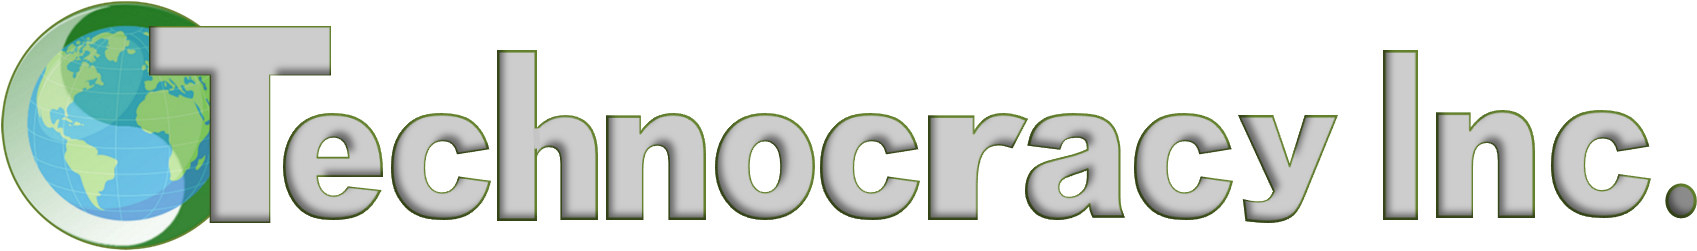 Technocracy Inc. – Official Site Logo